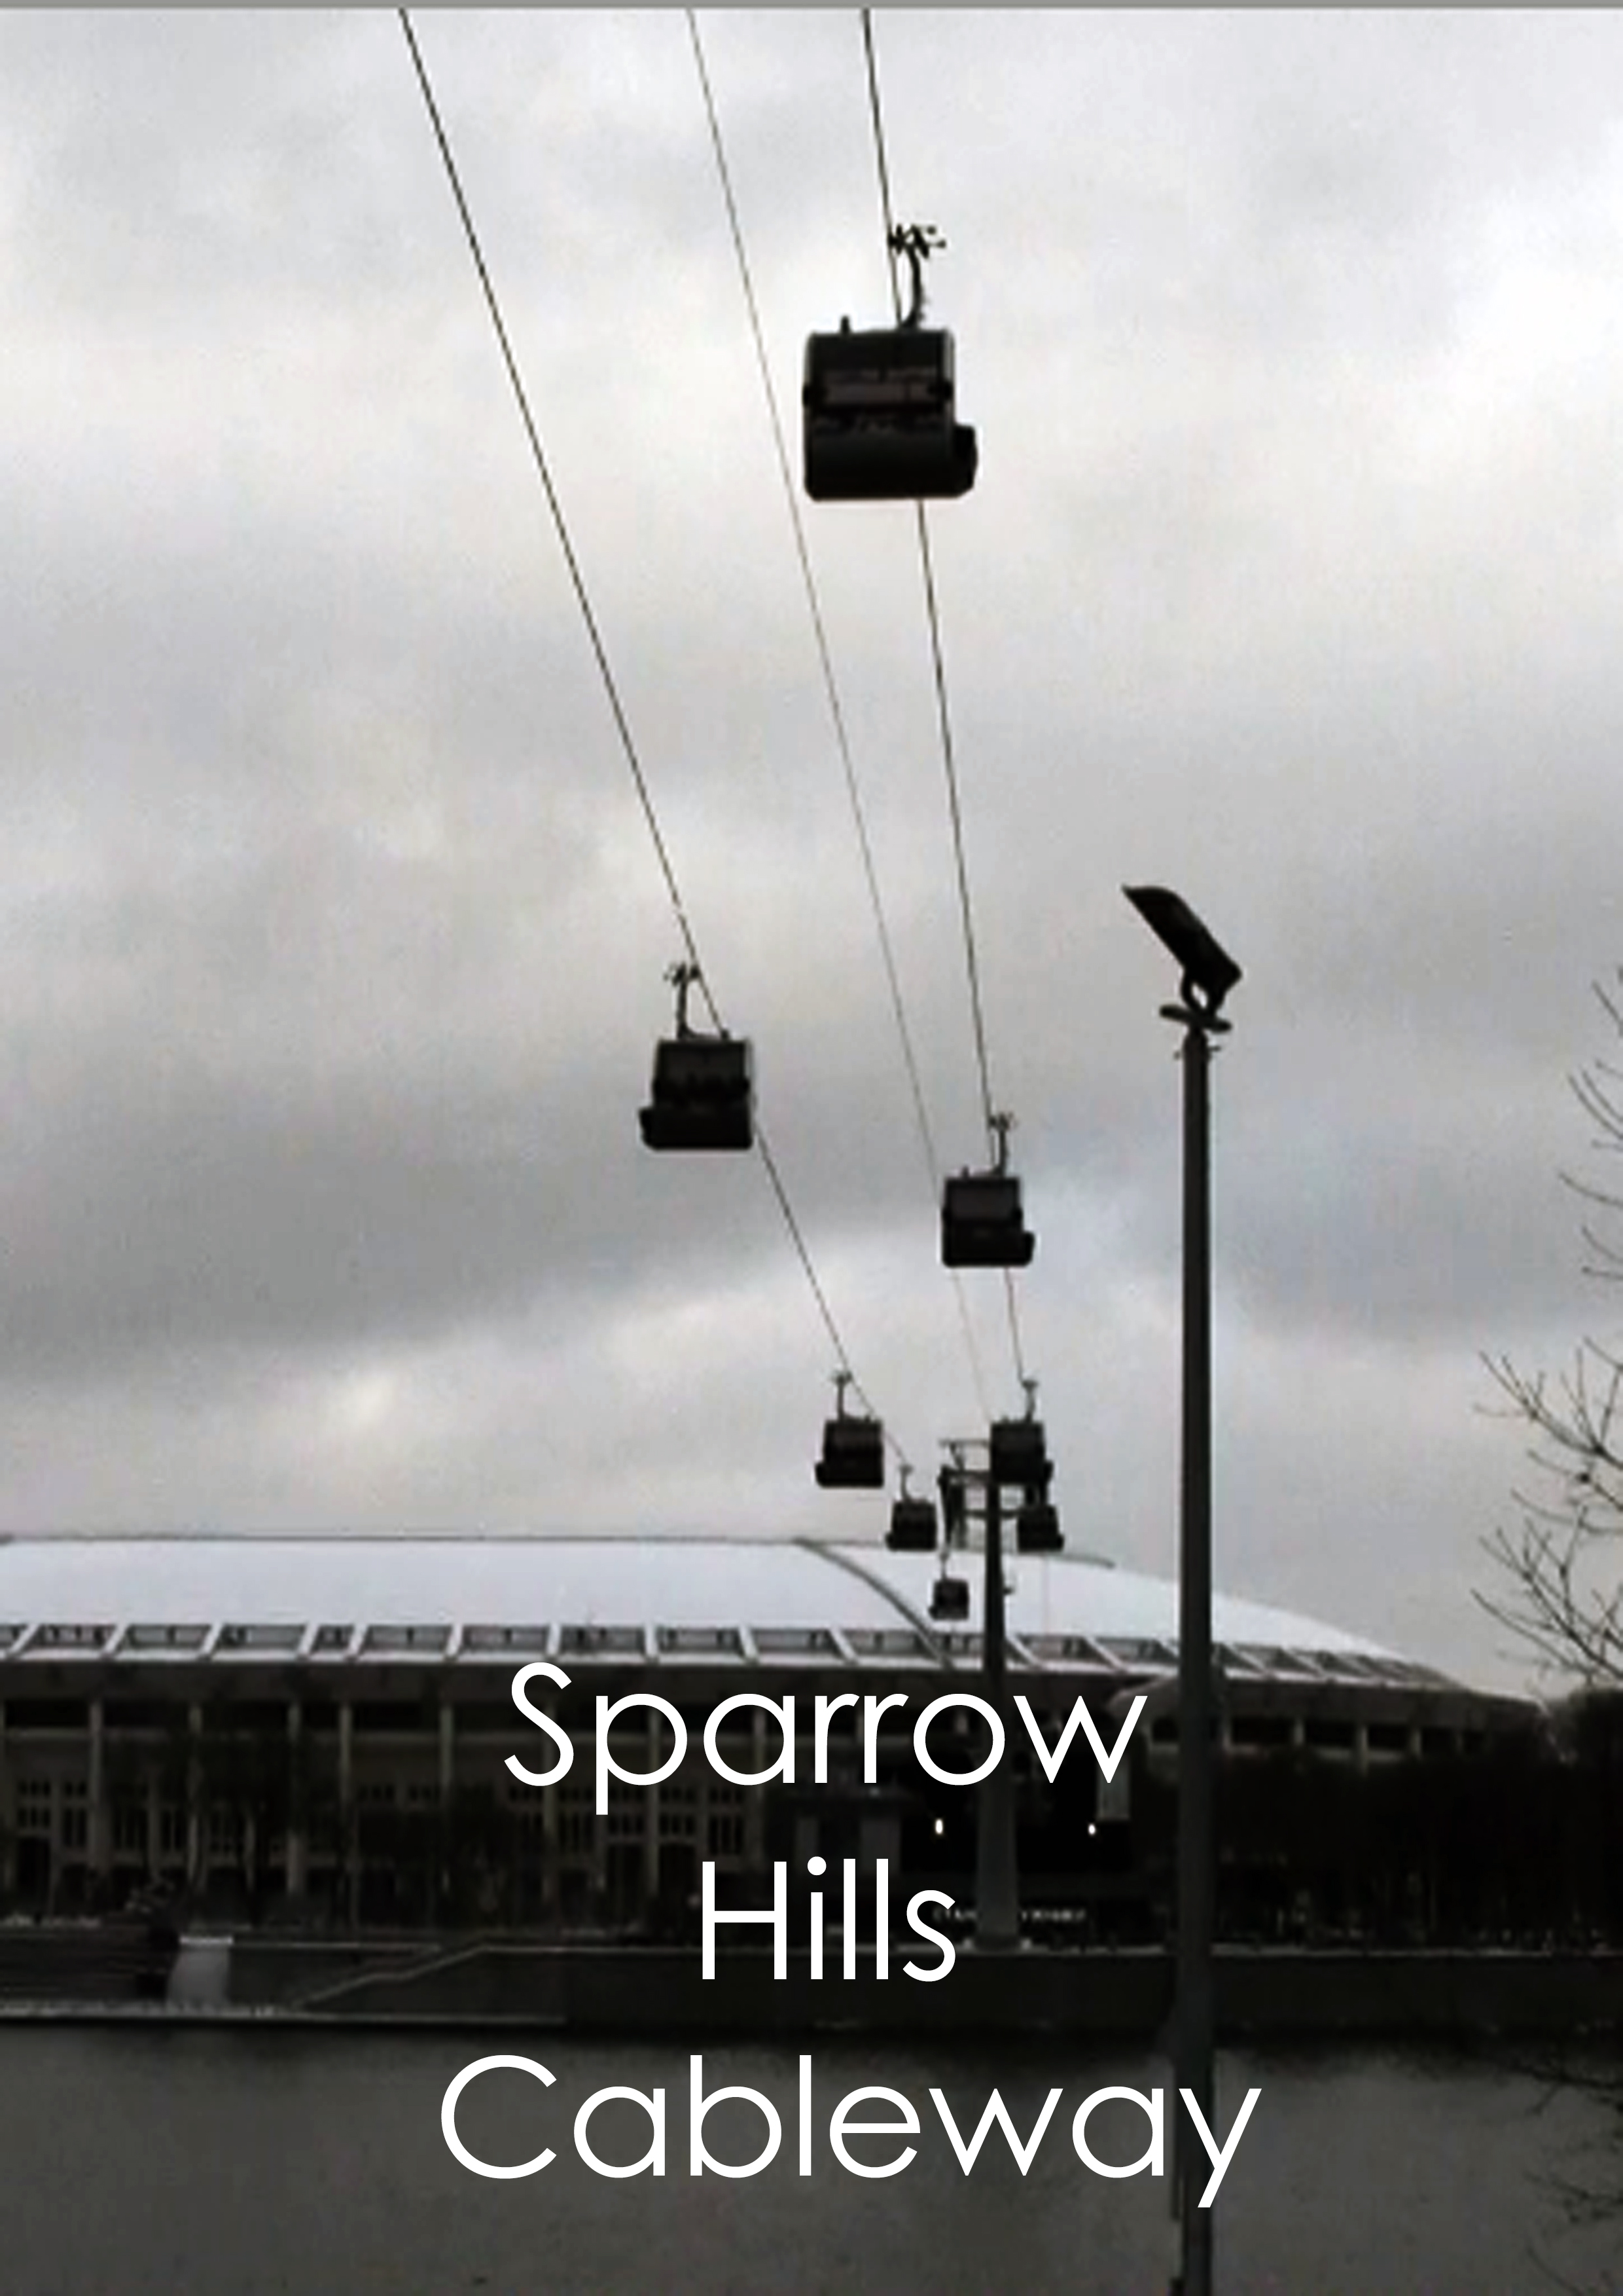 Sparrow Hills Cableway